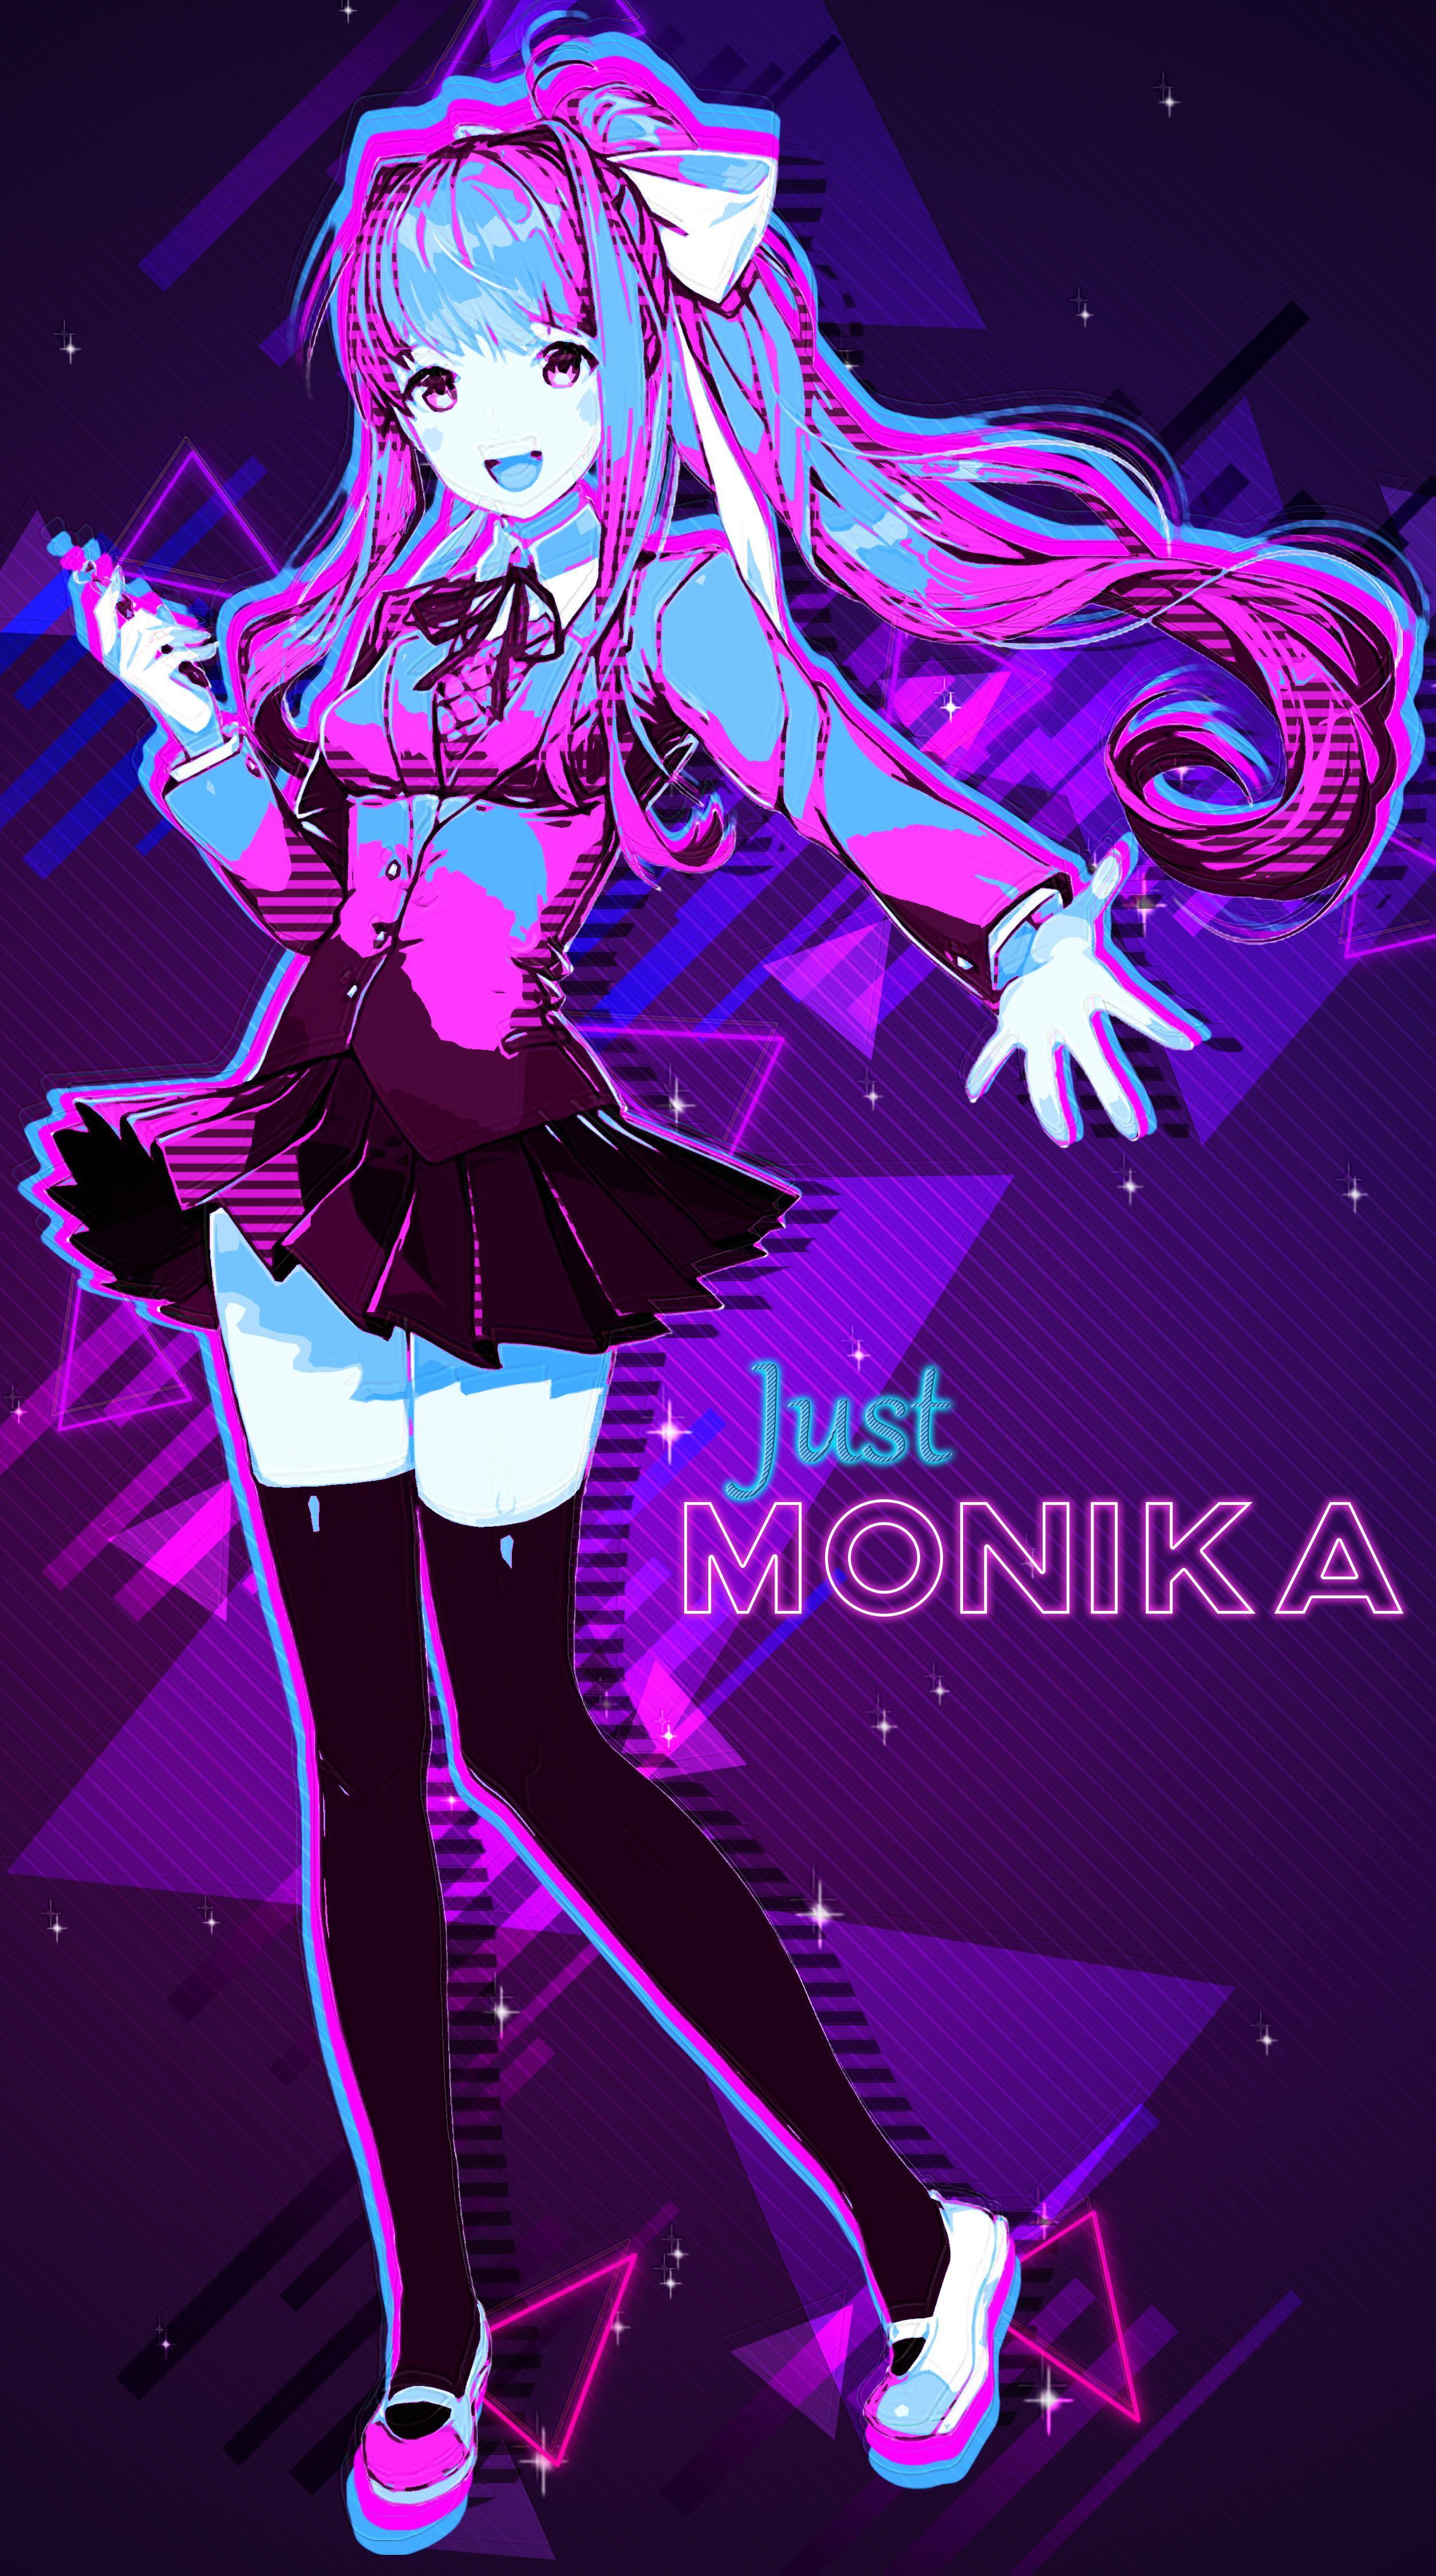 Monika Phone Wallpapers - Top Free Monika Phone Backgrounds